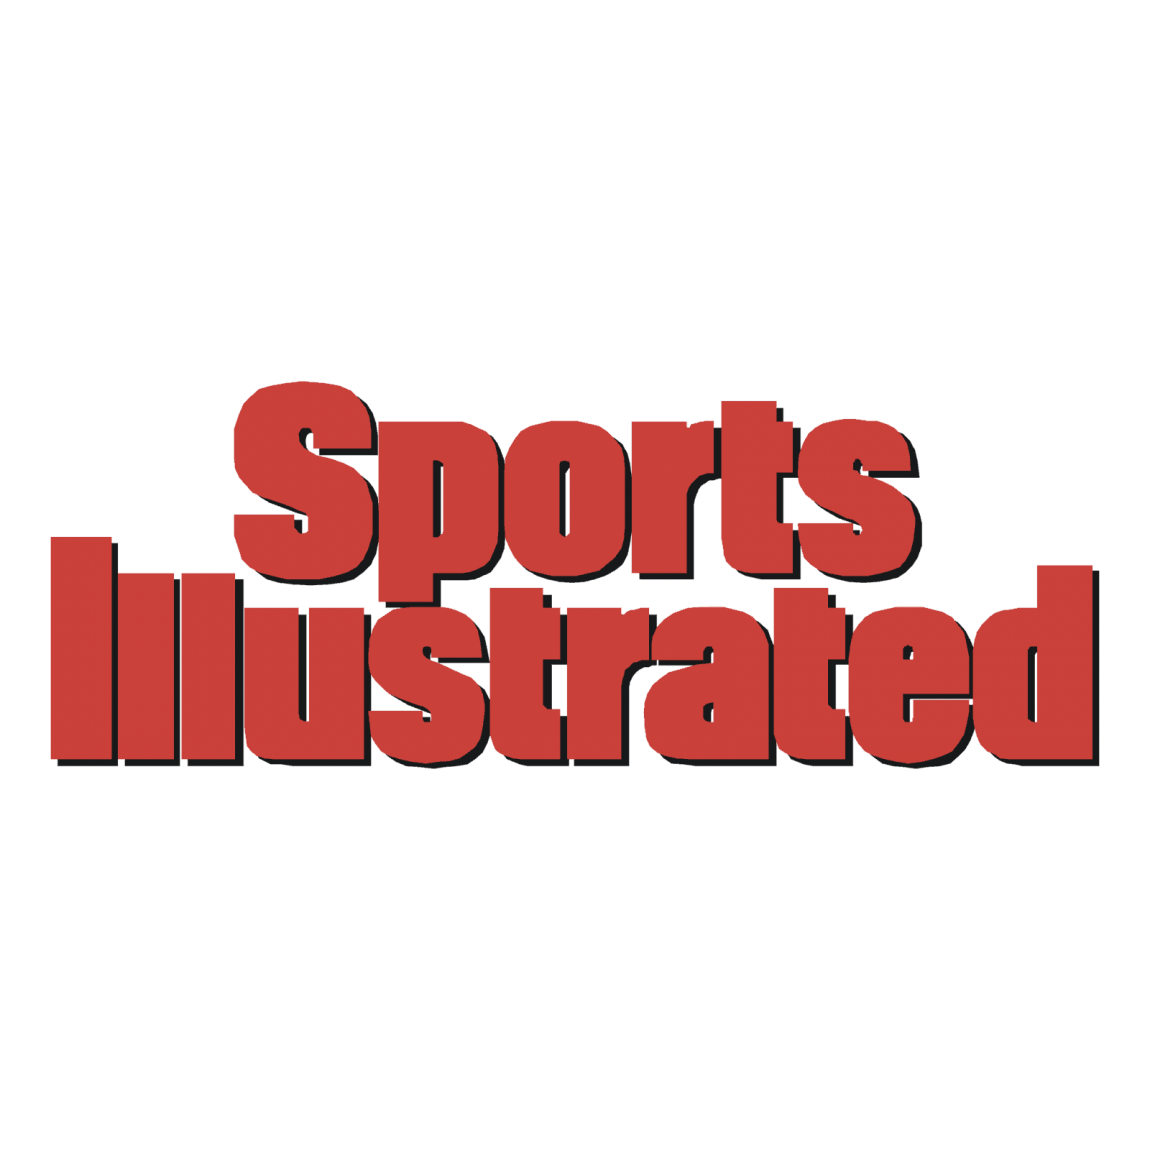 sports illustrated logo png transparent